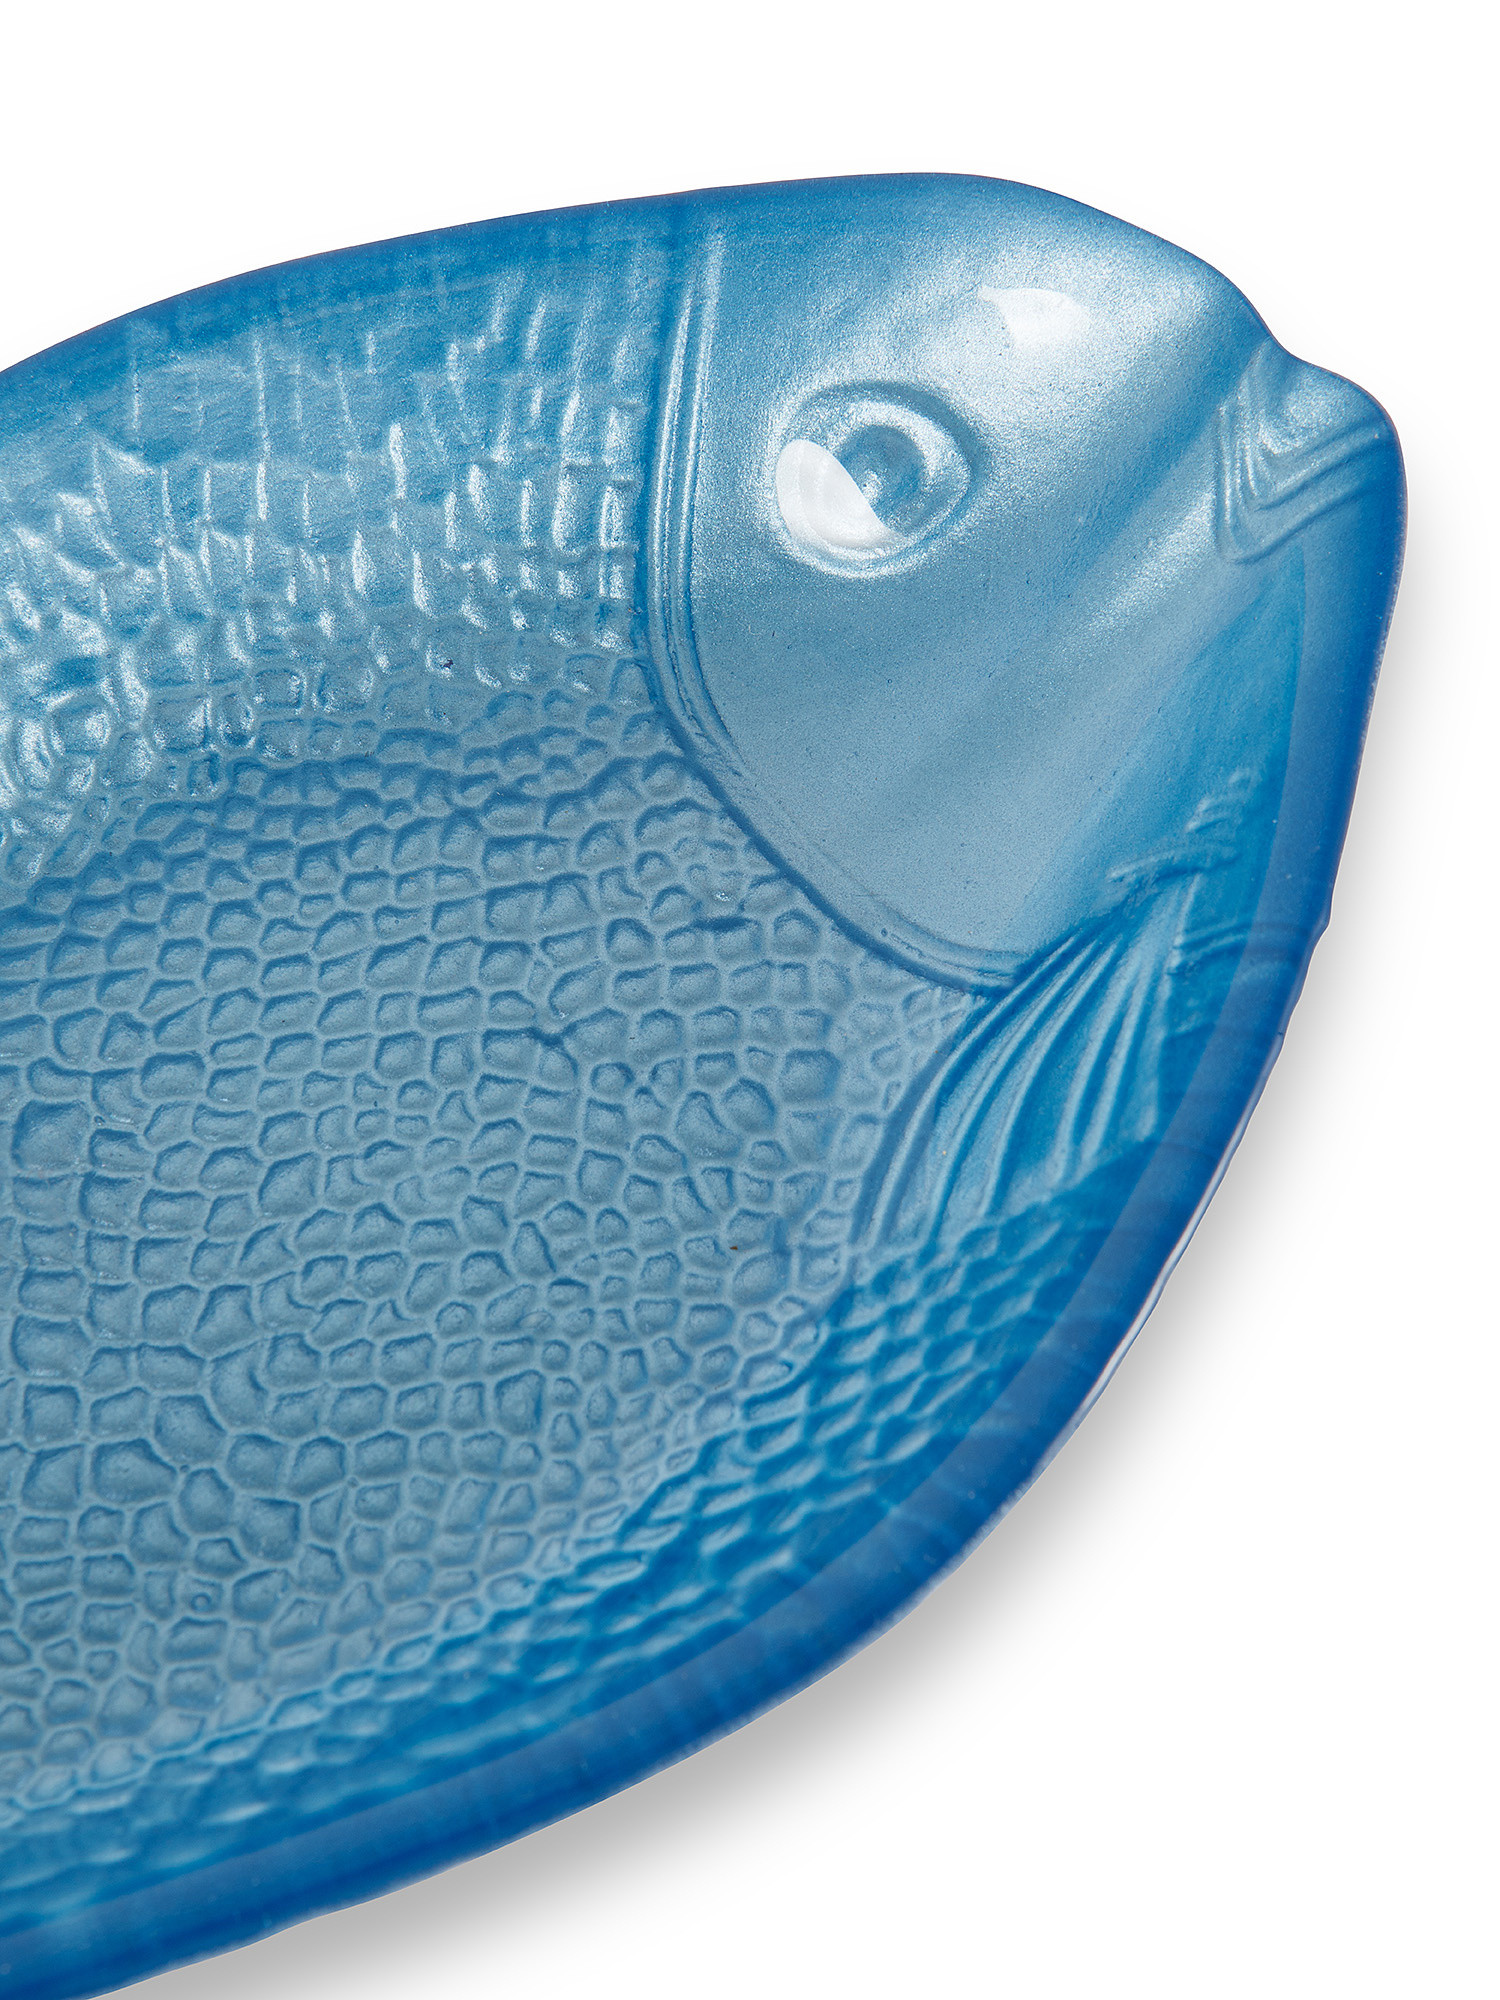 Piattino vetro a pesce, Blu, large image number 1